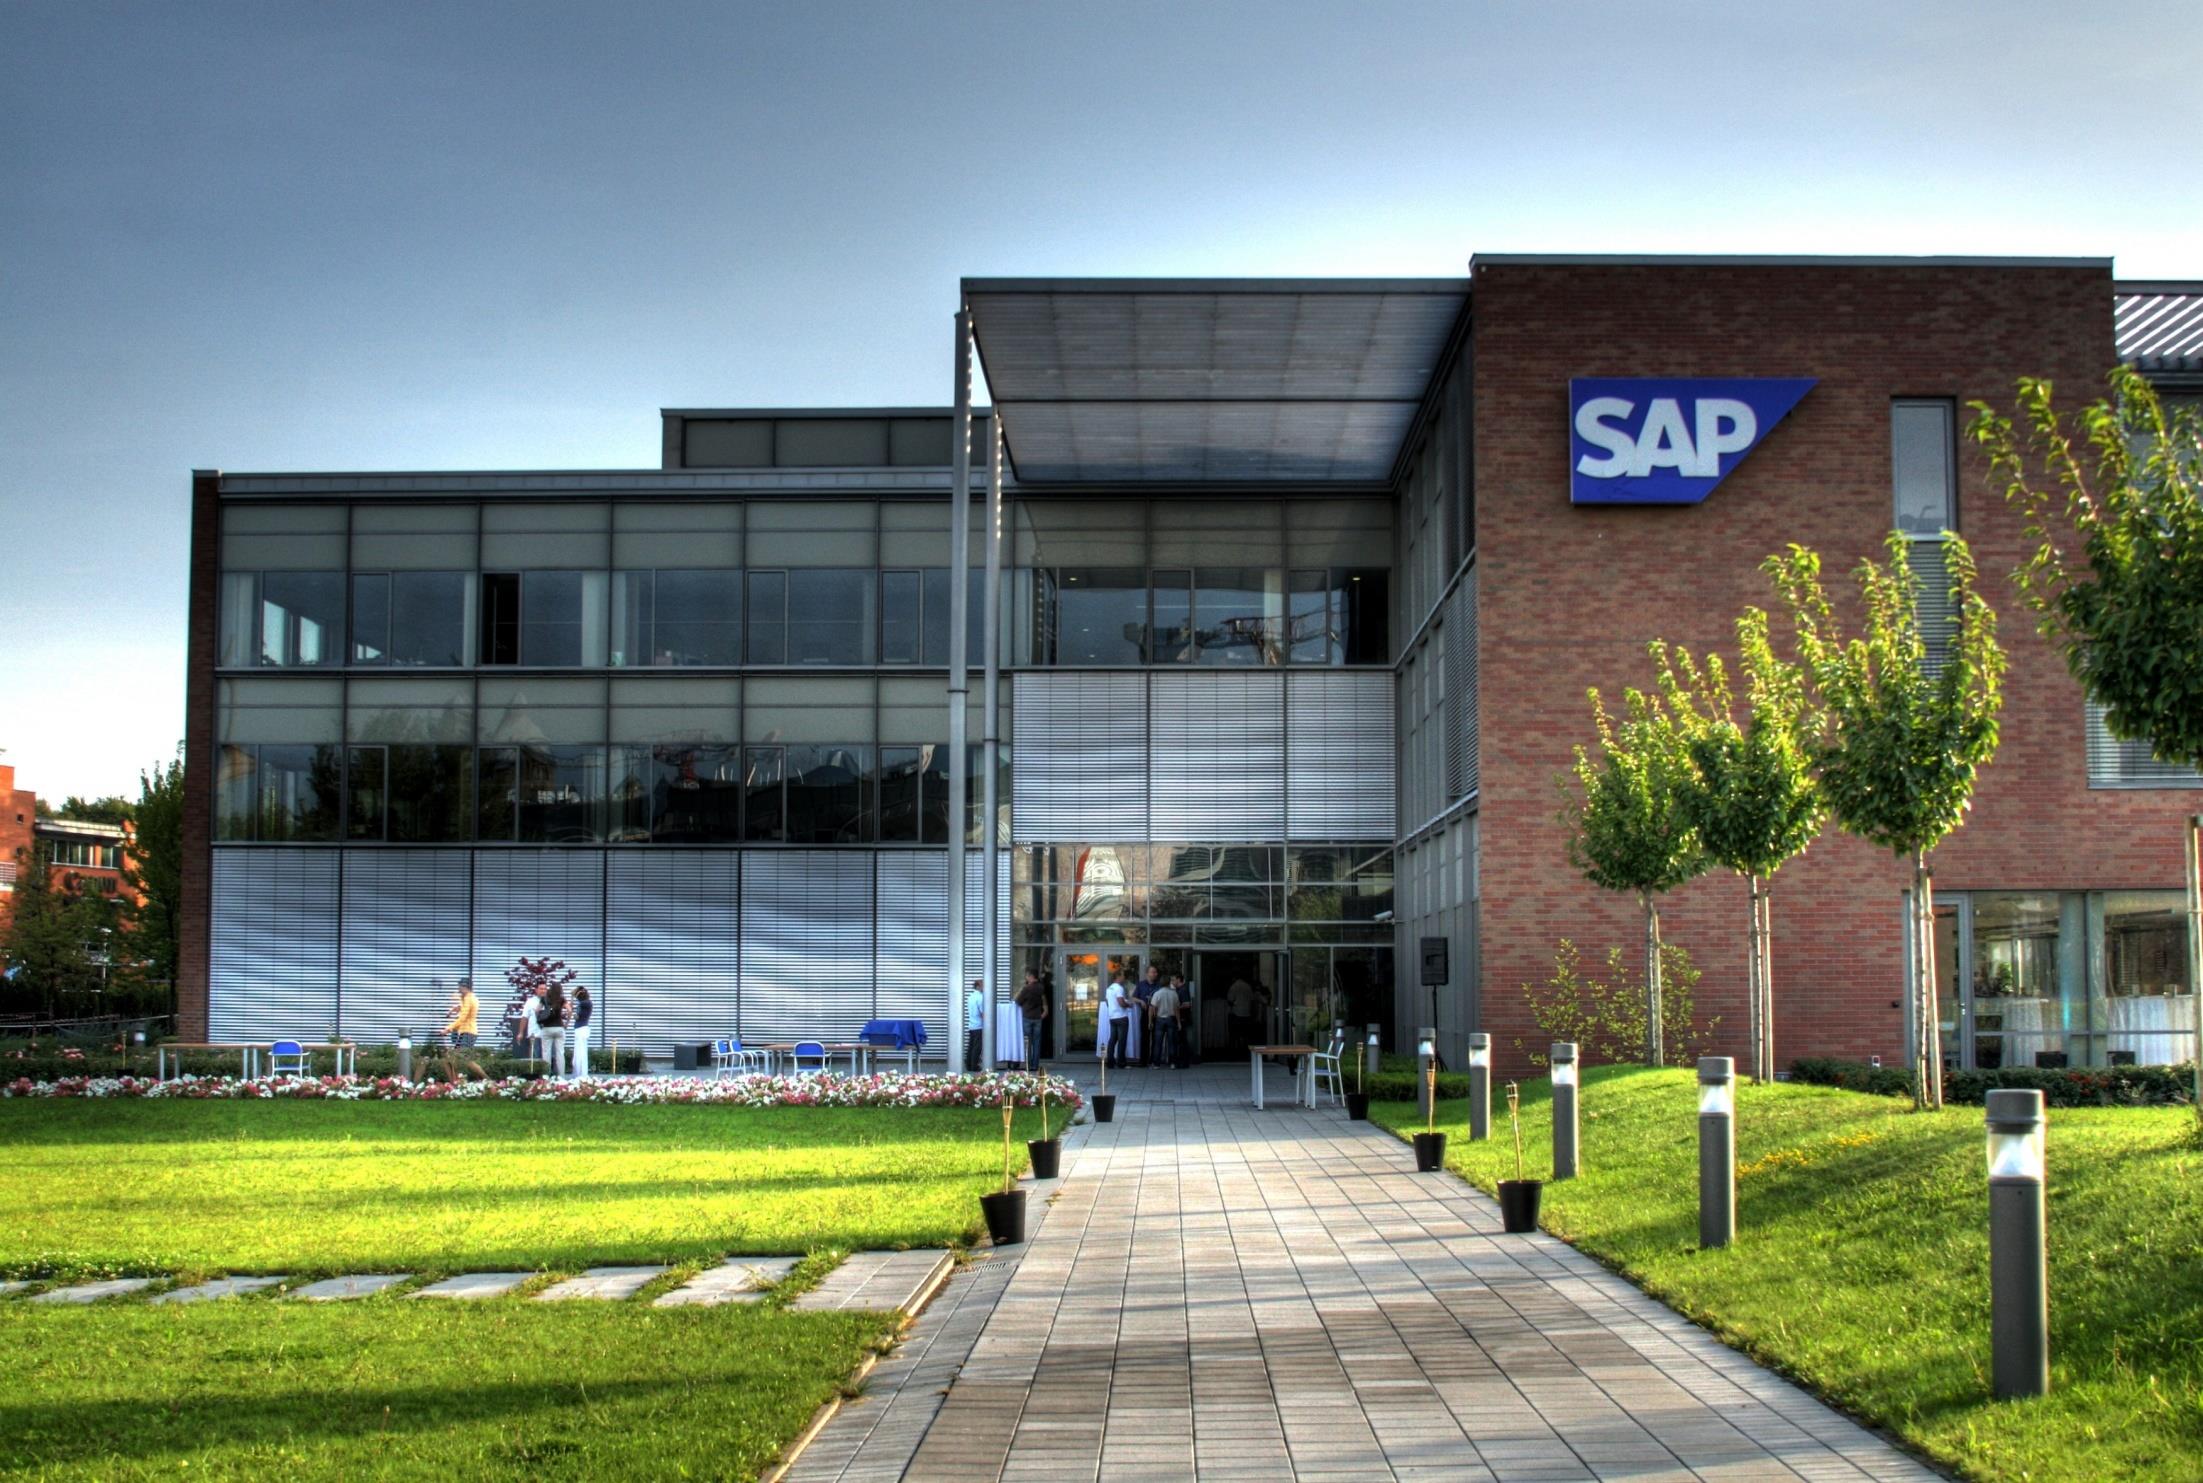 SAP Hungary Kft.